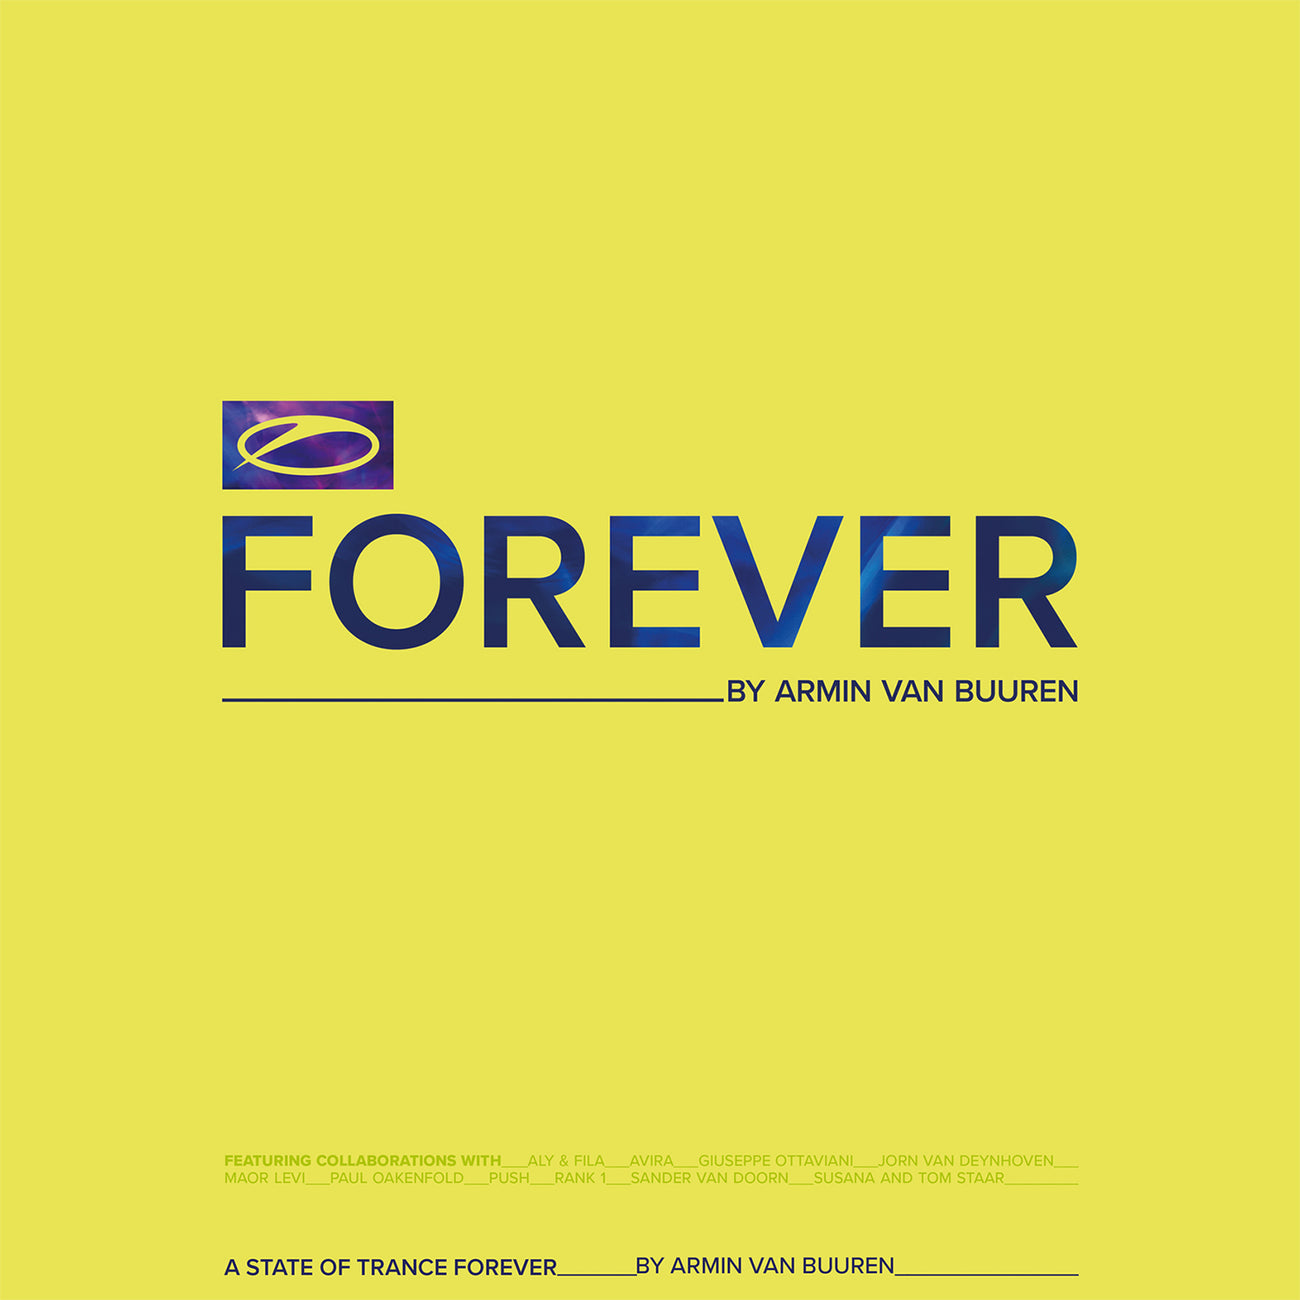 A State Of Trance FOREVER - By Armin van Buuren (Vinyl)